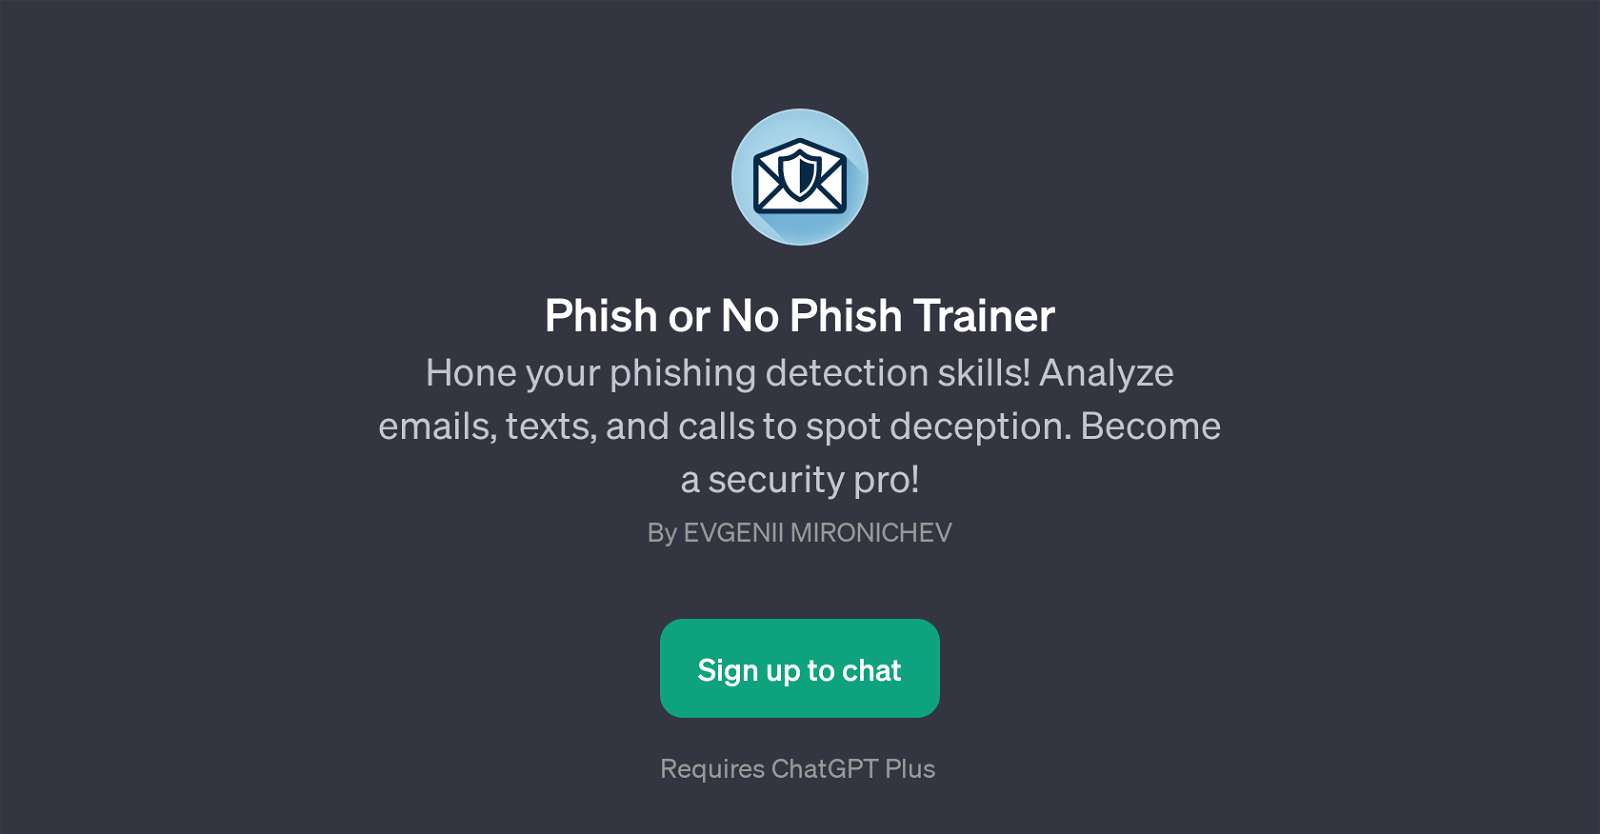 Phish or No Phish Trainer website